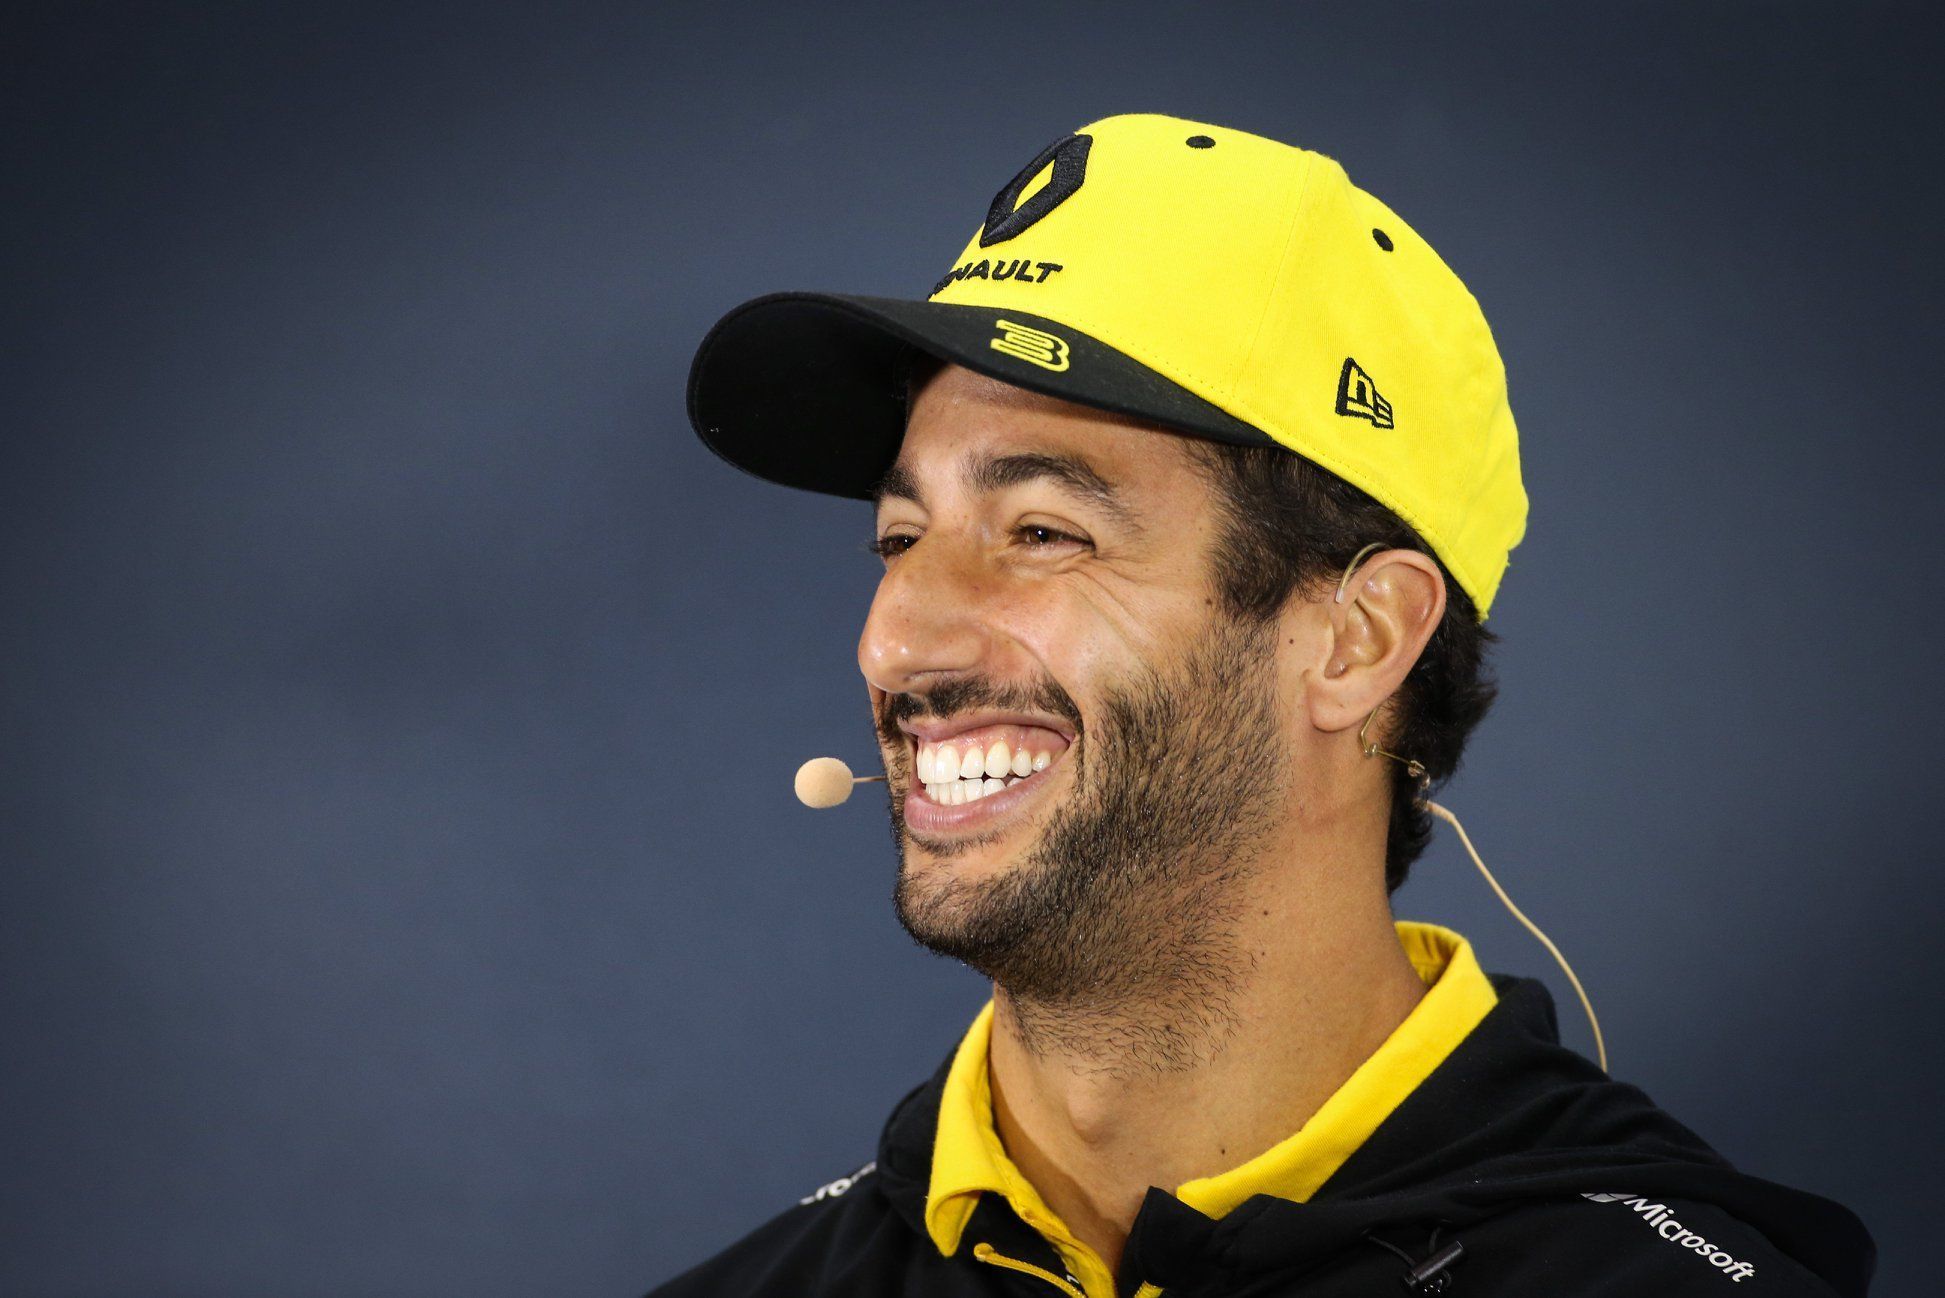 Podcast: Ricciardo on F1 career, Red Bull/Renault, Baku clash & more